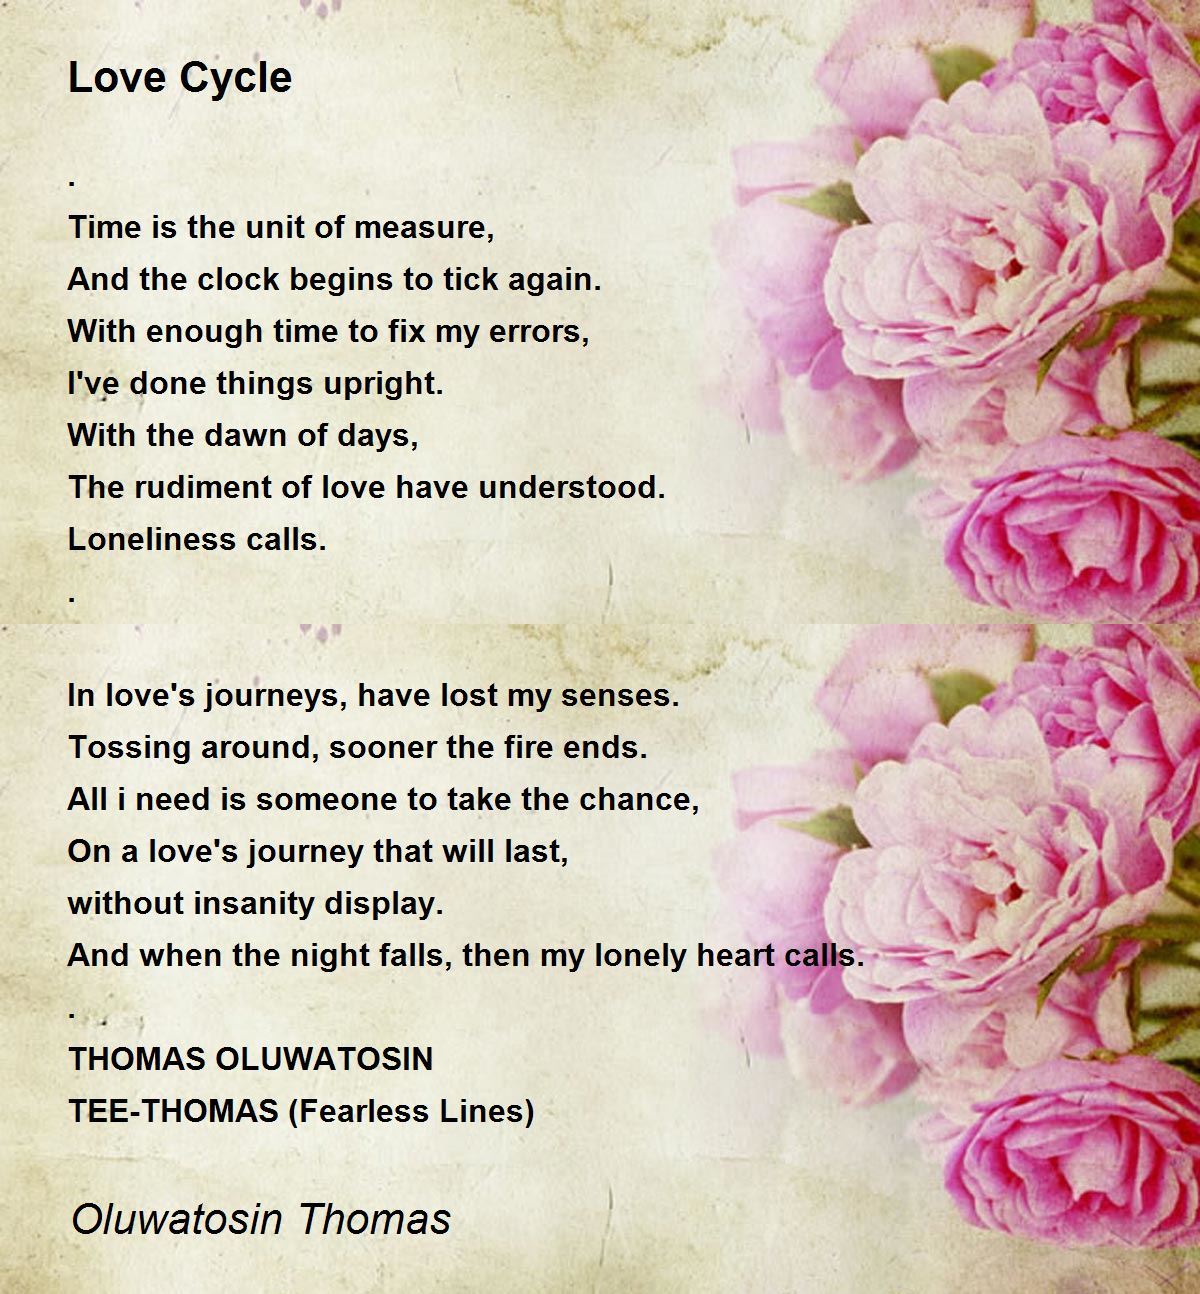 love cycle poem essay in english pdf